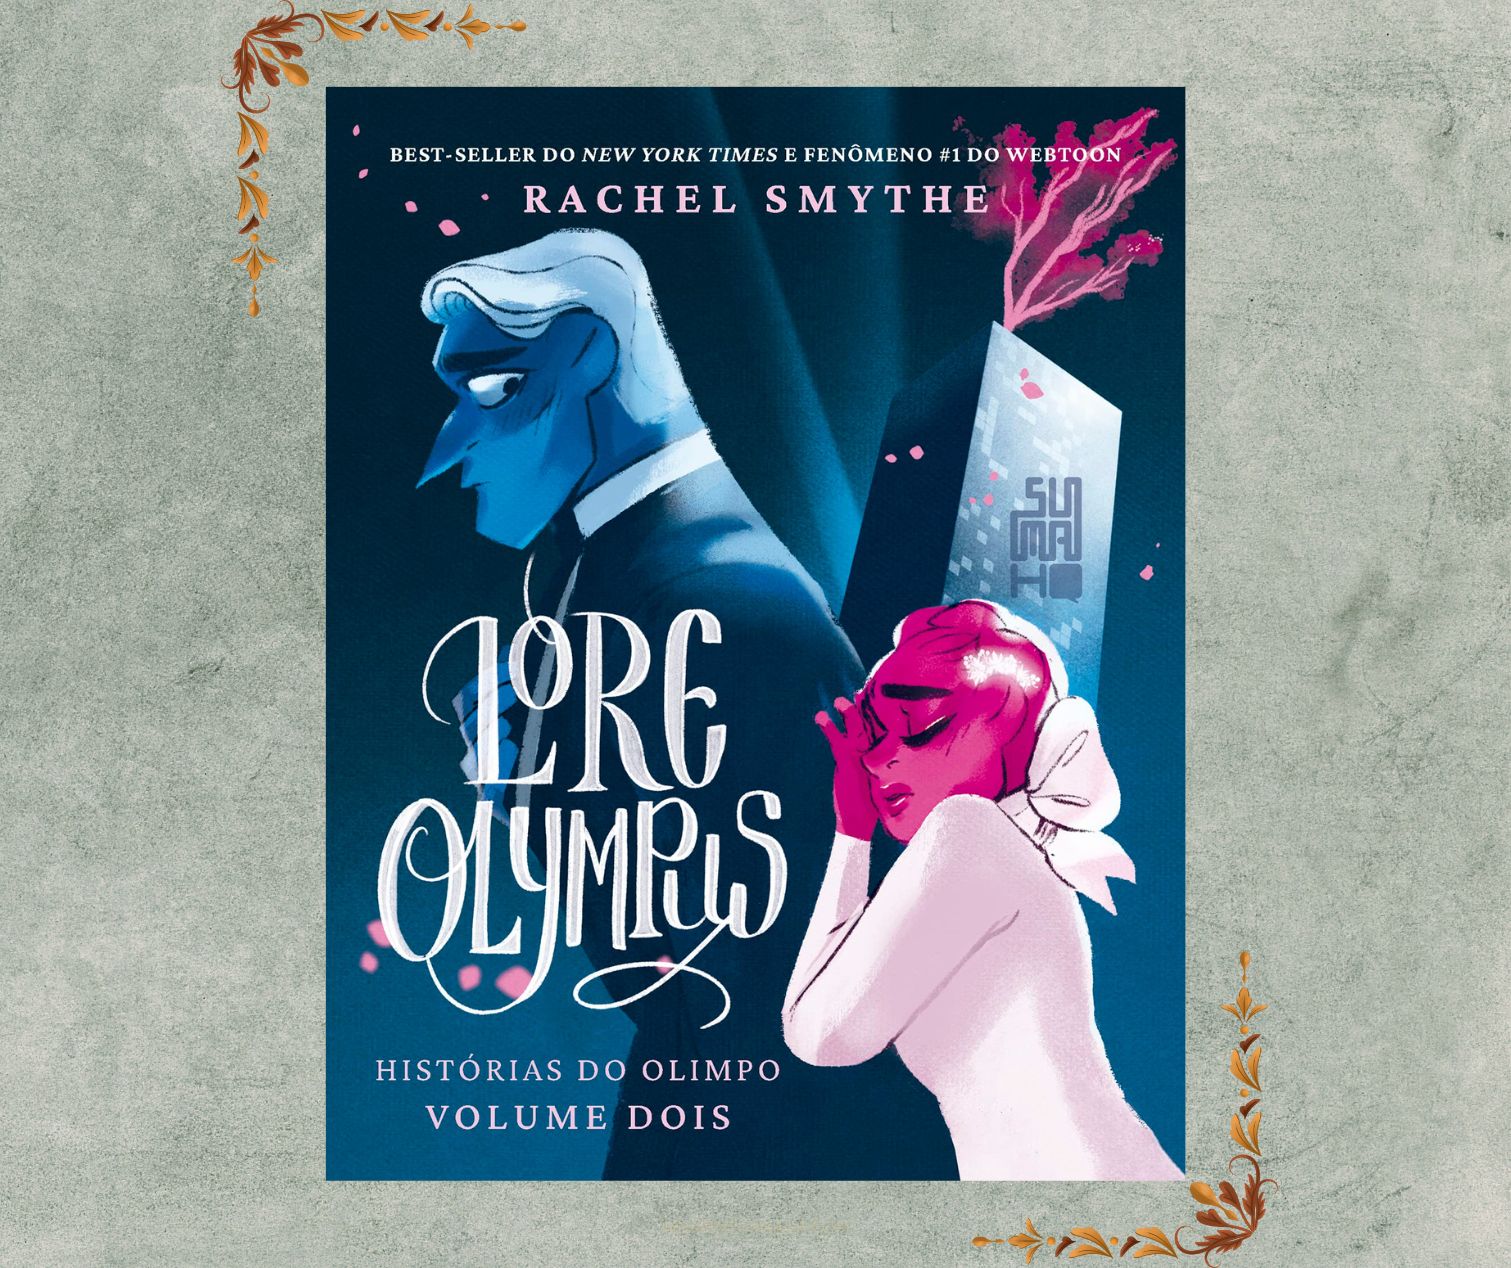 Resenha: Lore Olympus: Histórias do Olimpo Vol.2, de Rachel Smythe 